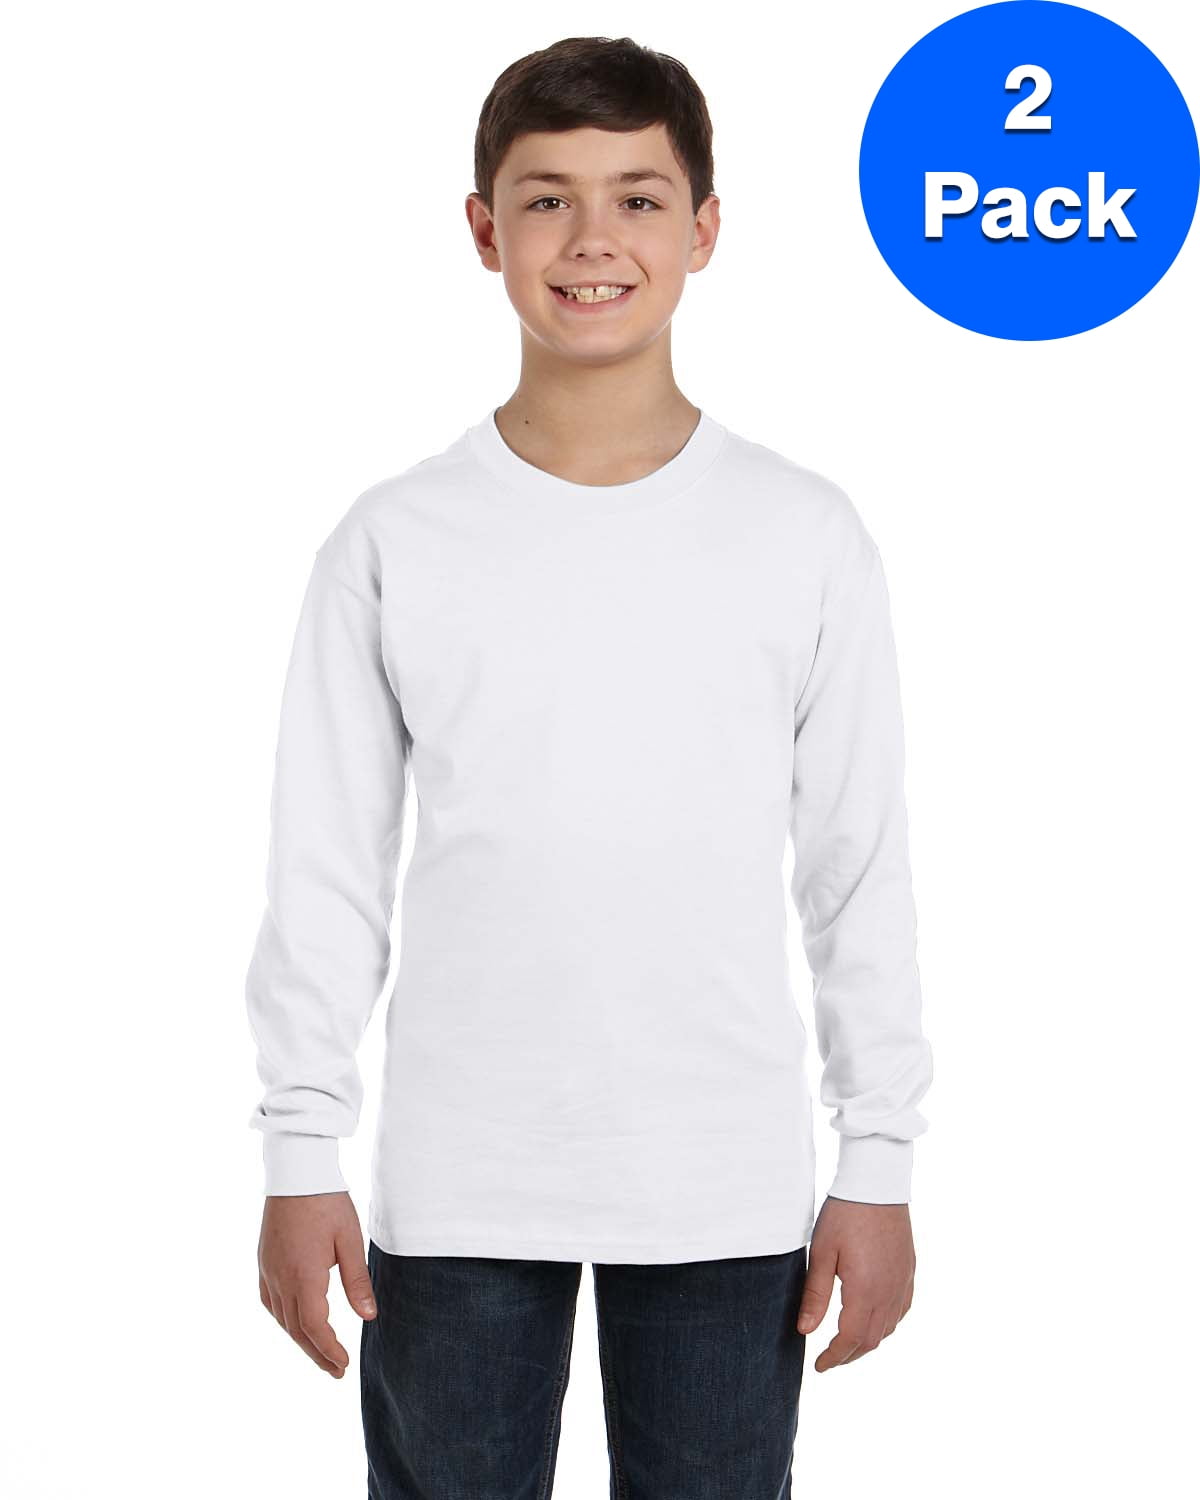 Boys' Short/Long Sleeve Cotton Shirt